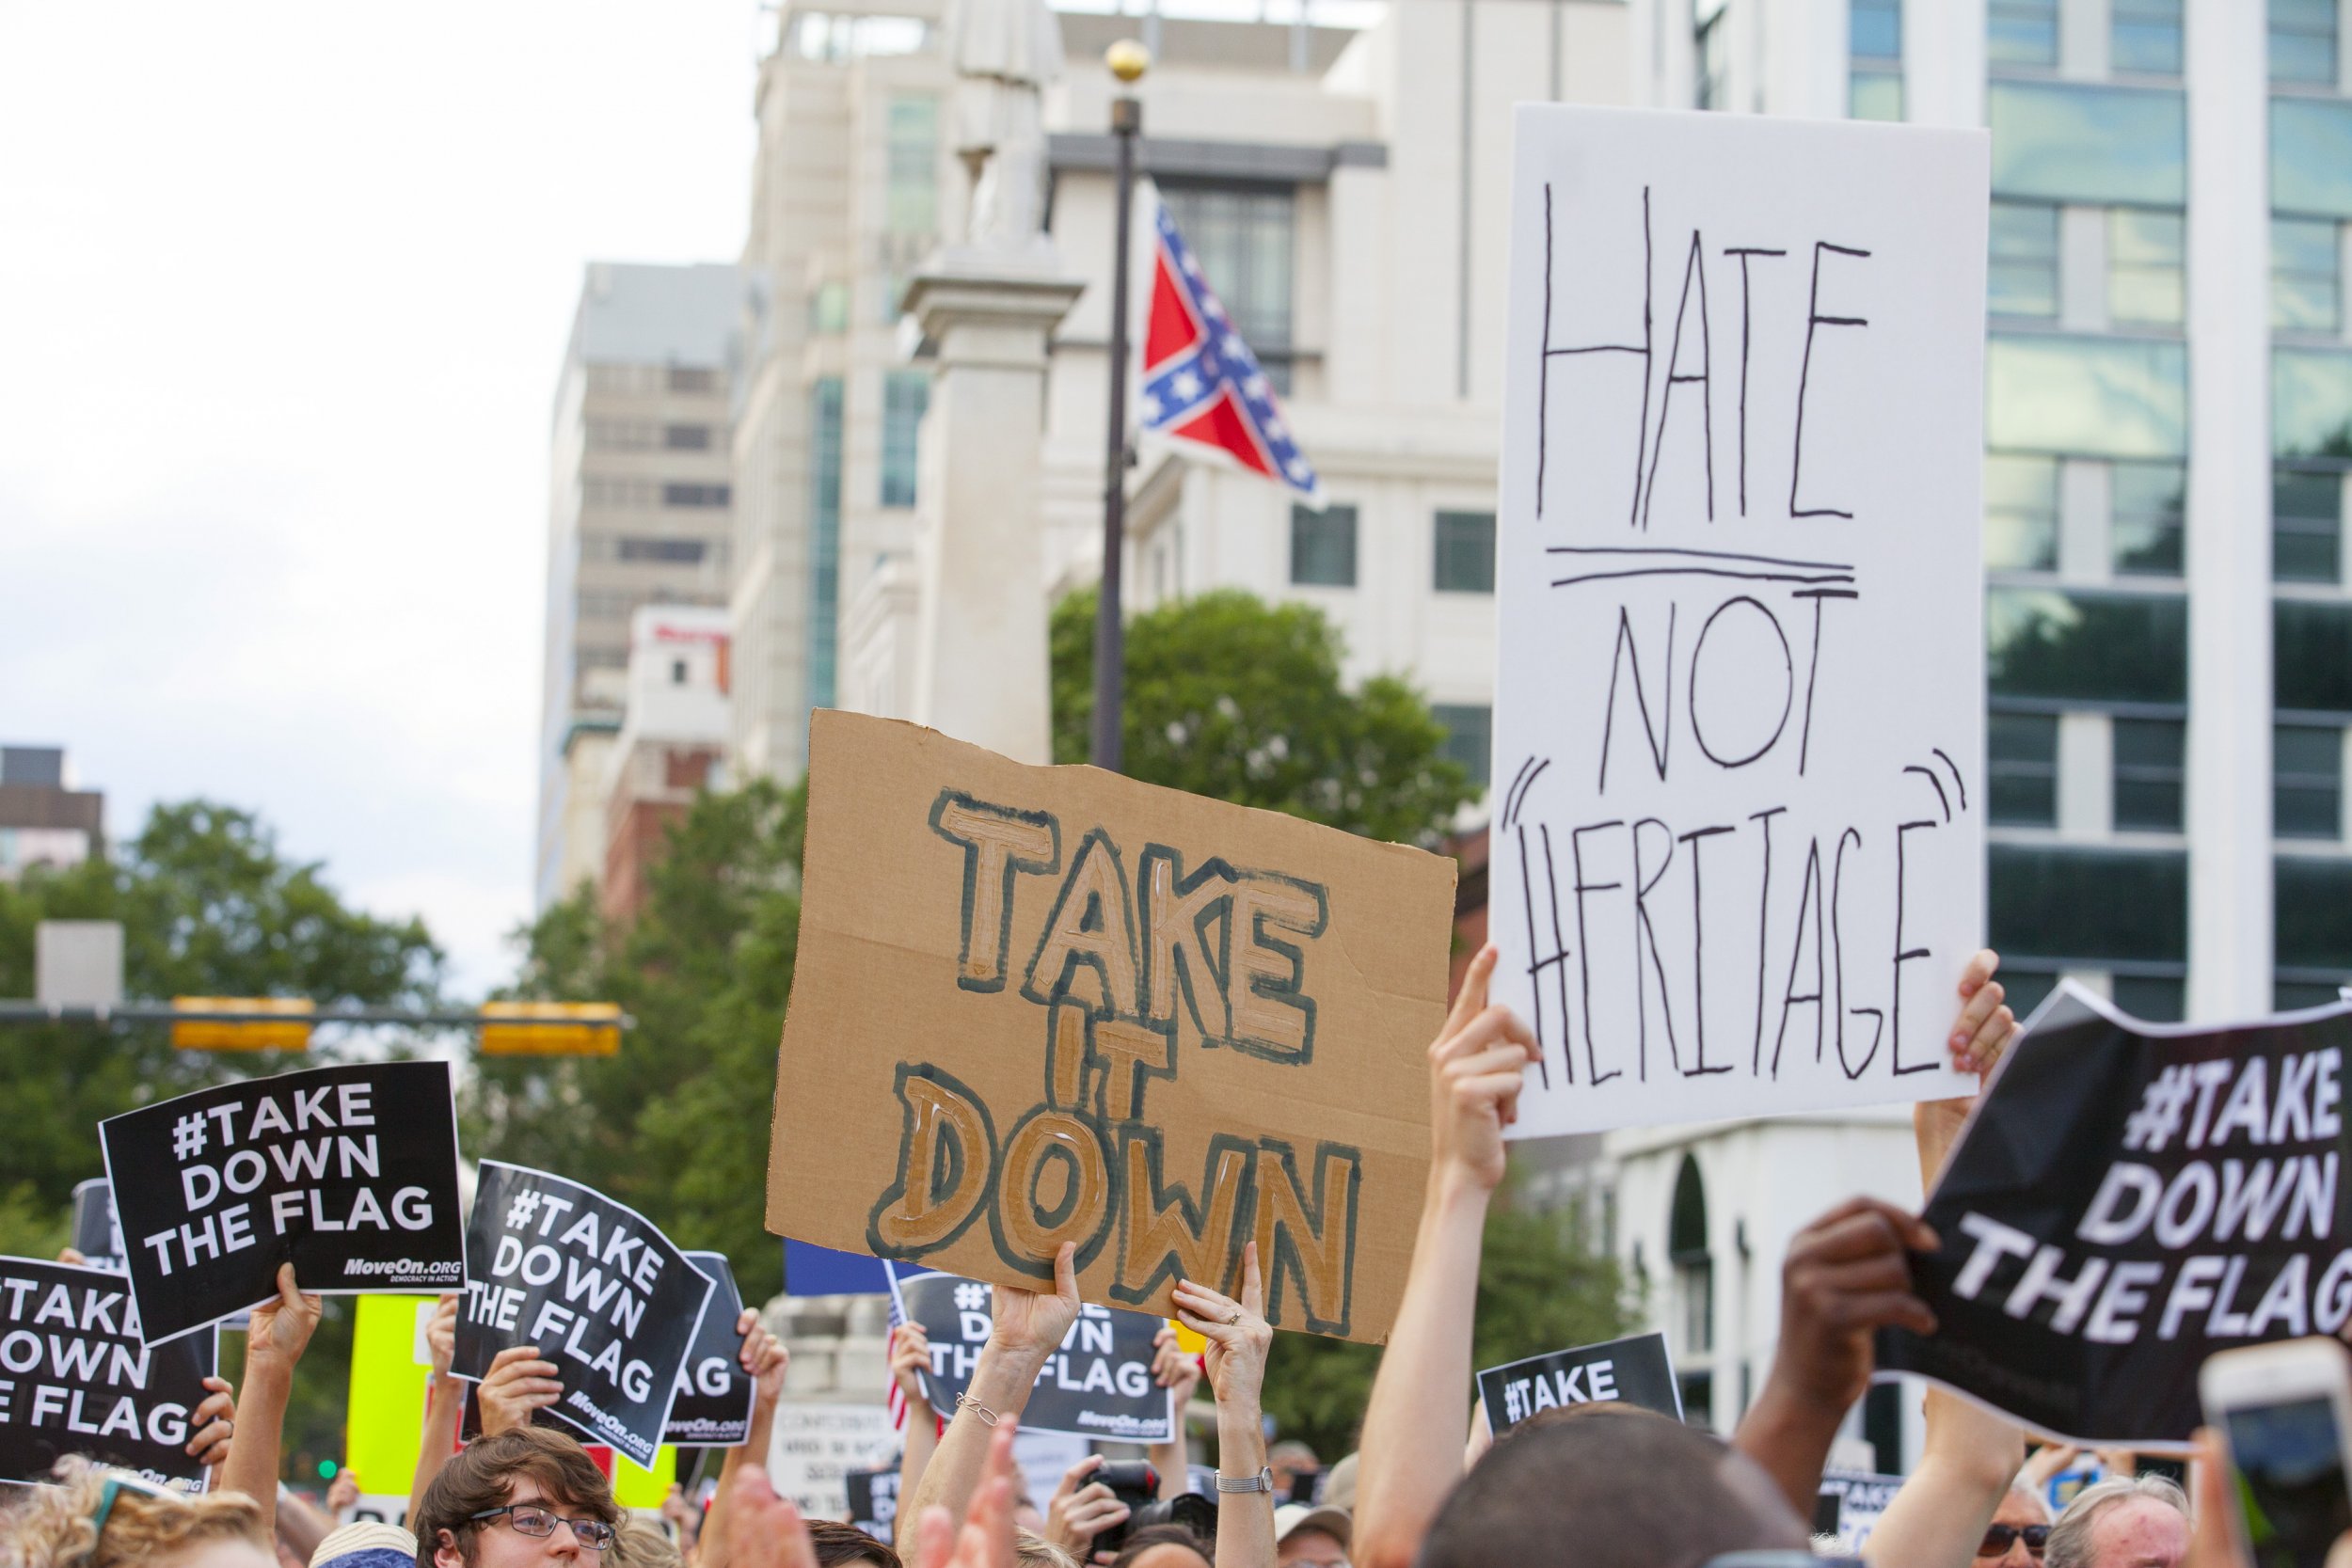 6-22-15 Confederate flag protest